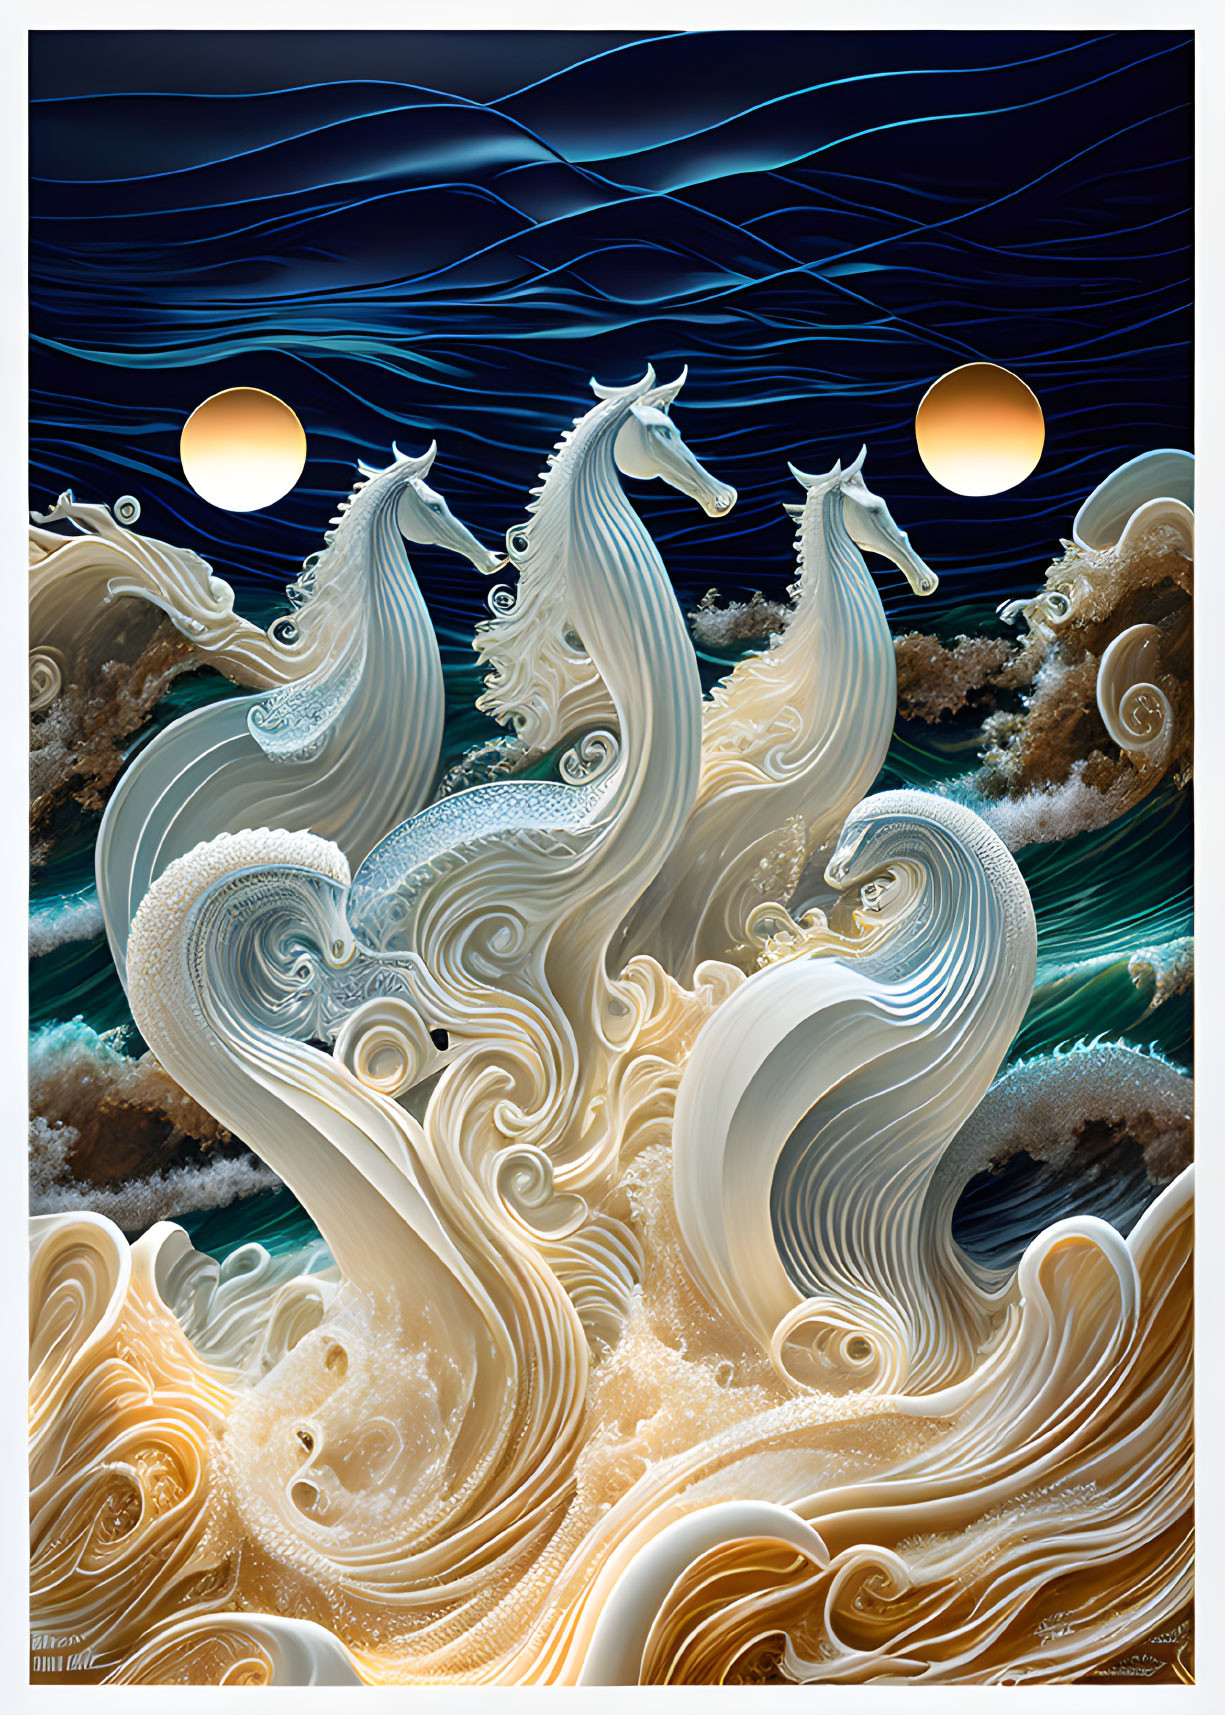 Stylized white horses in ocean waves under dark sky